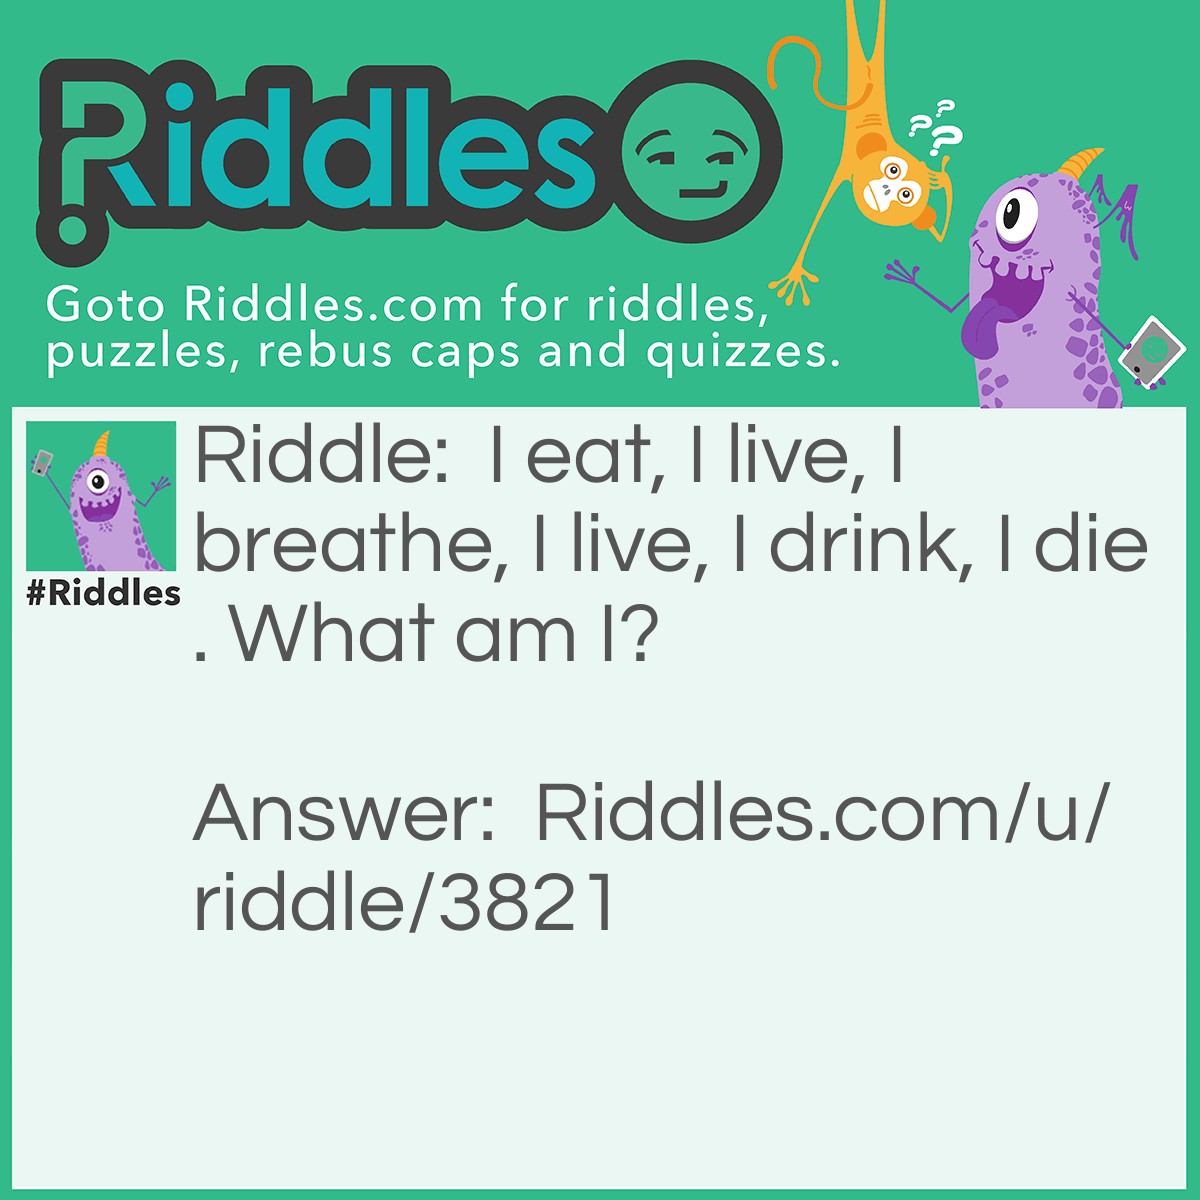 Riddle: I eat, I live, I breathe, I live, I drink, I die. What am I? Answer: Fire.